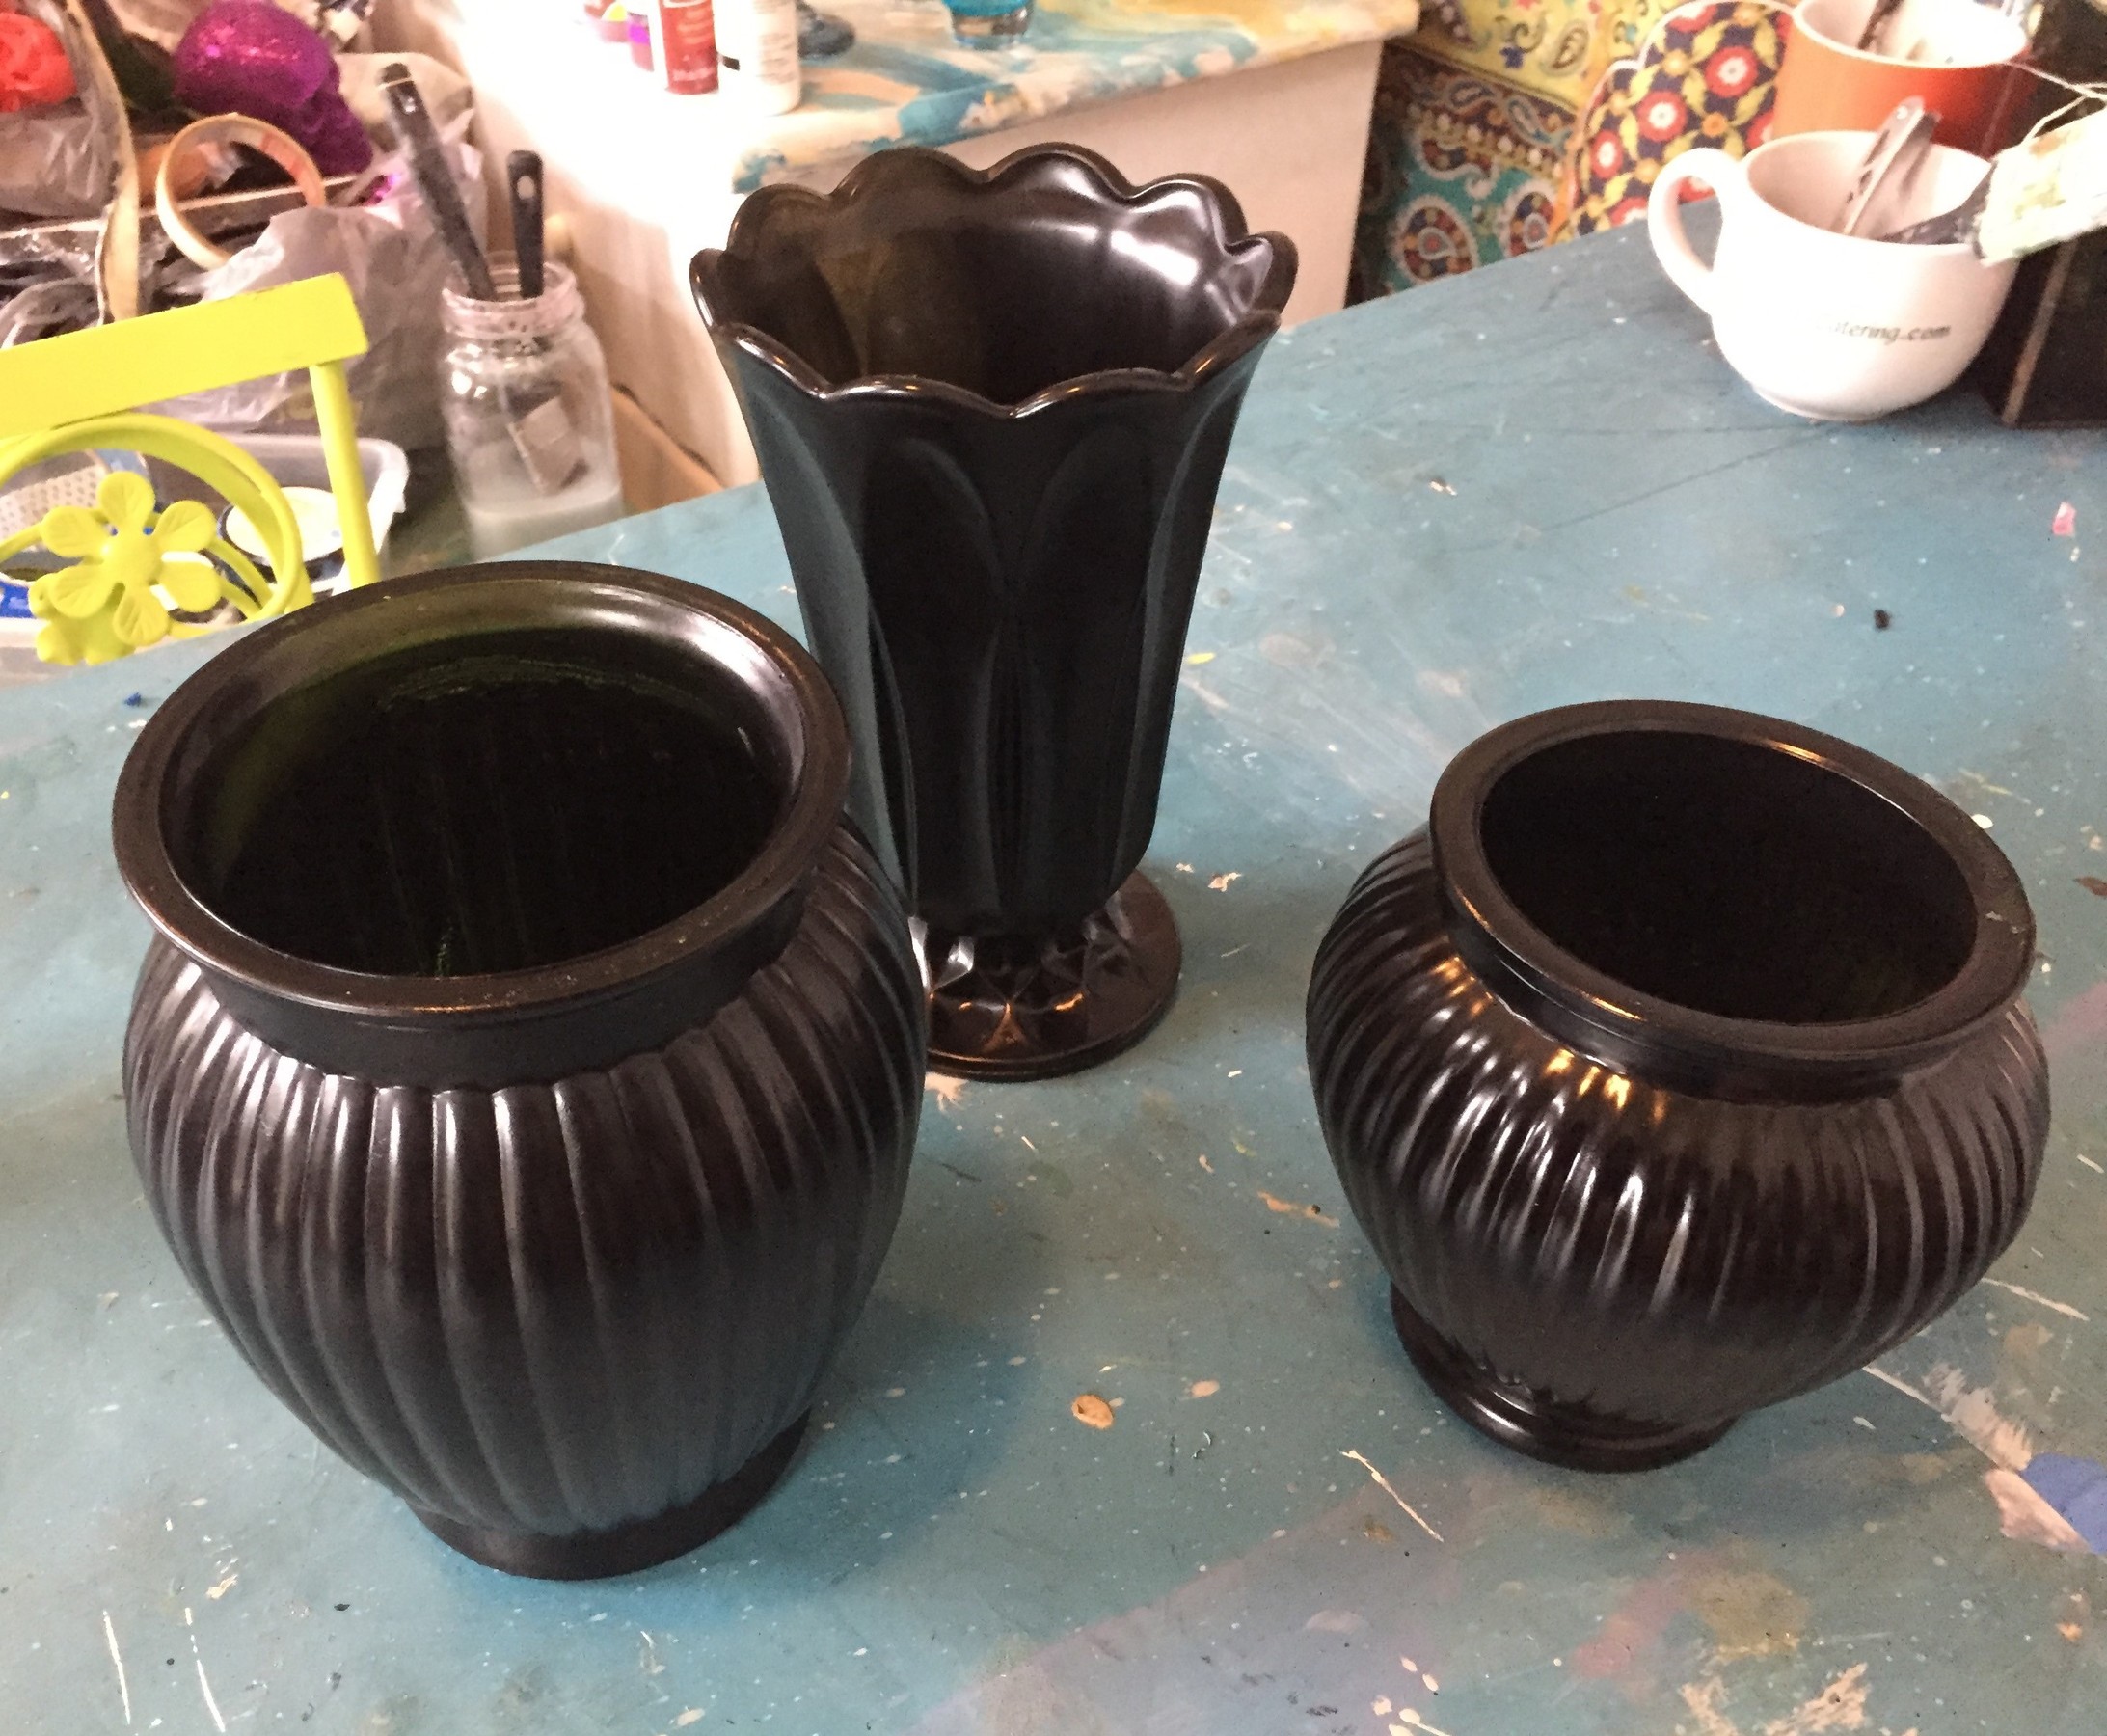 Tim's glass vases, spray-painted black.